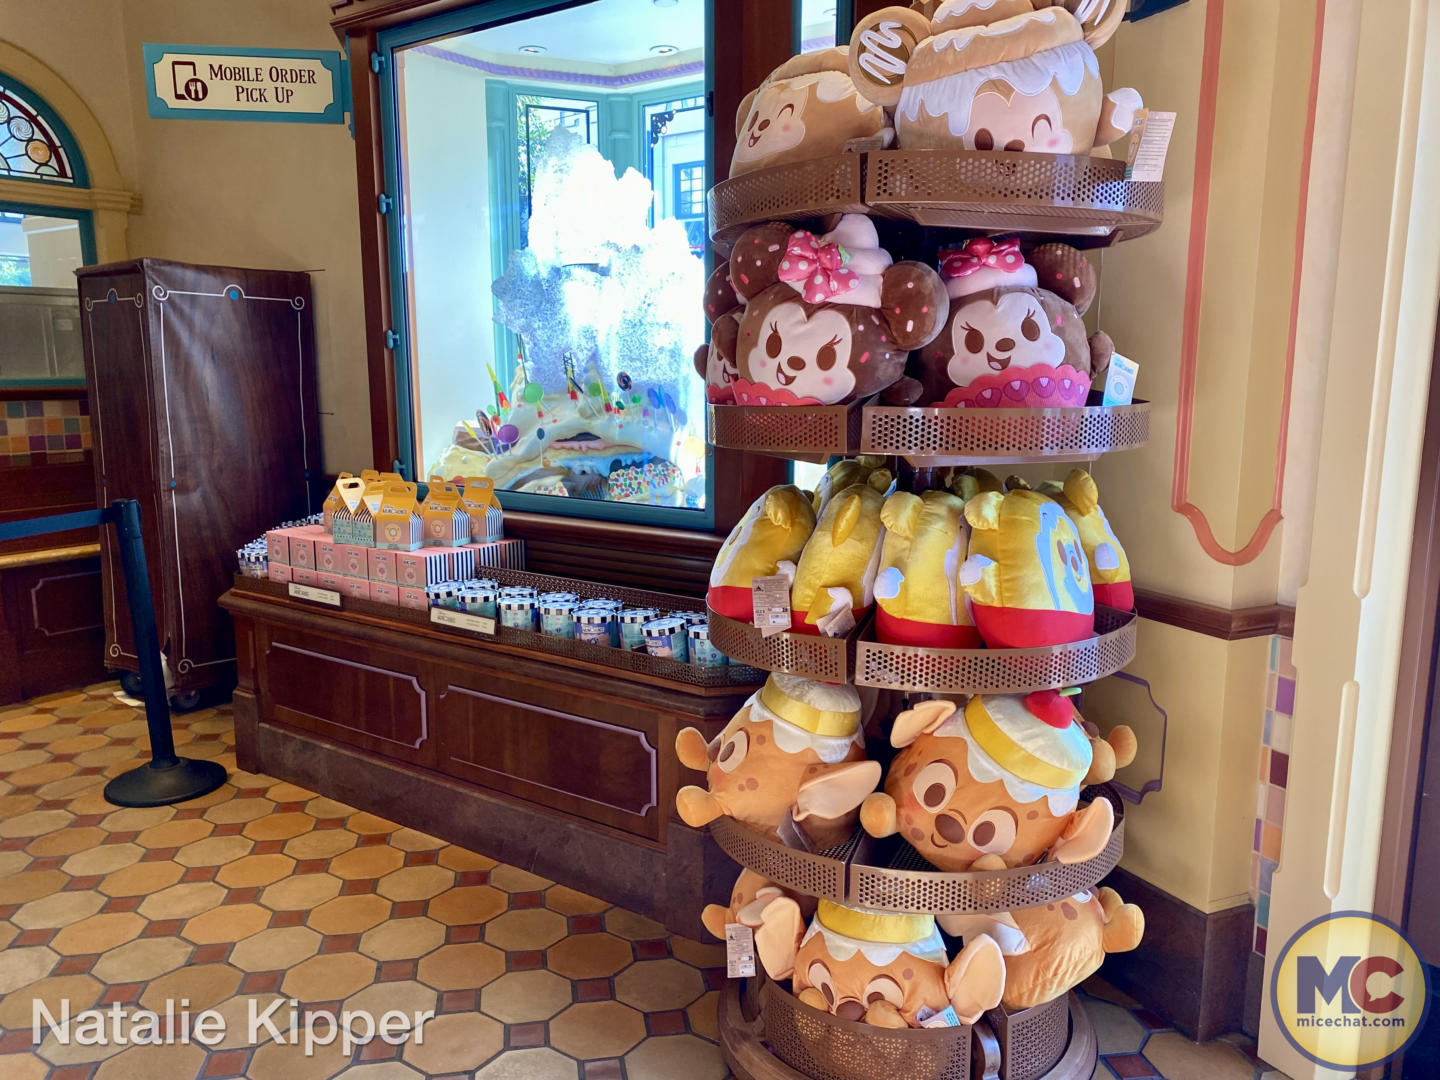 Just Disney - Mickey themed kitchen ✨😍😍 Credit: ARosangela